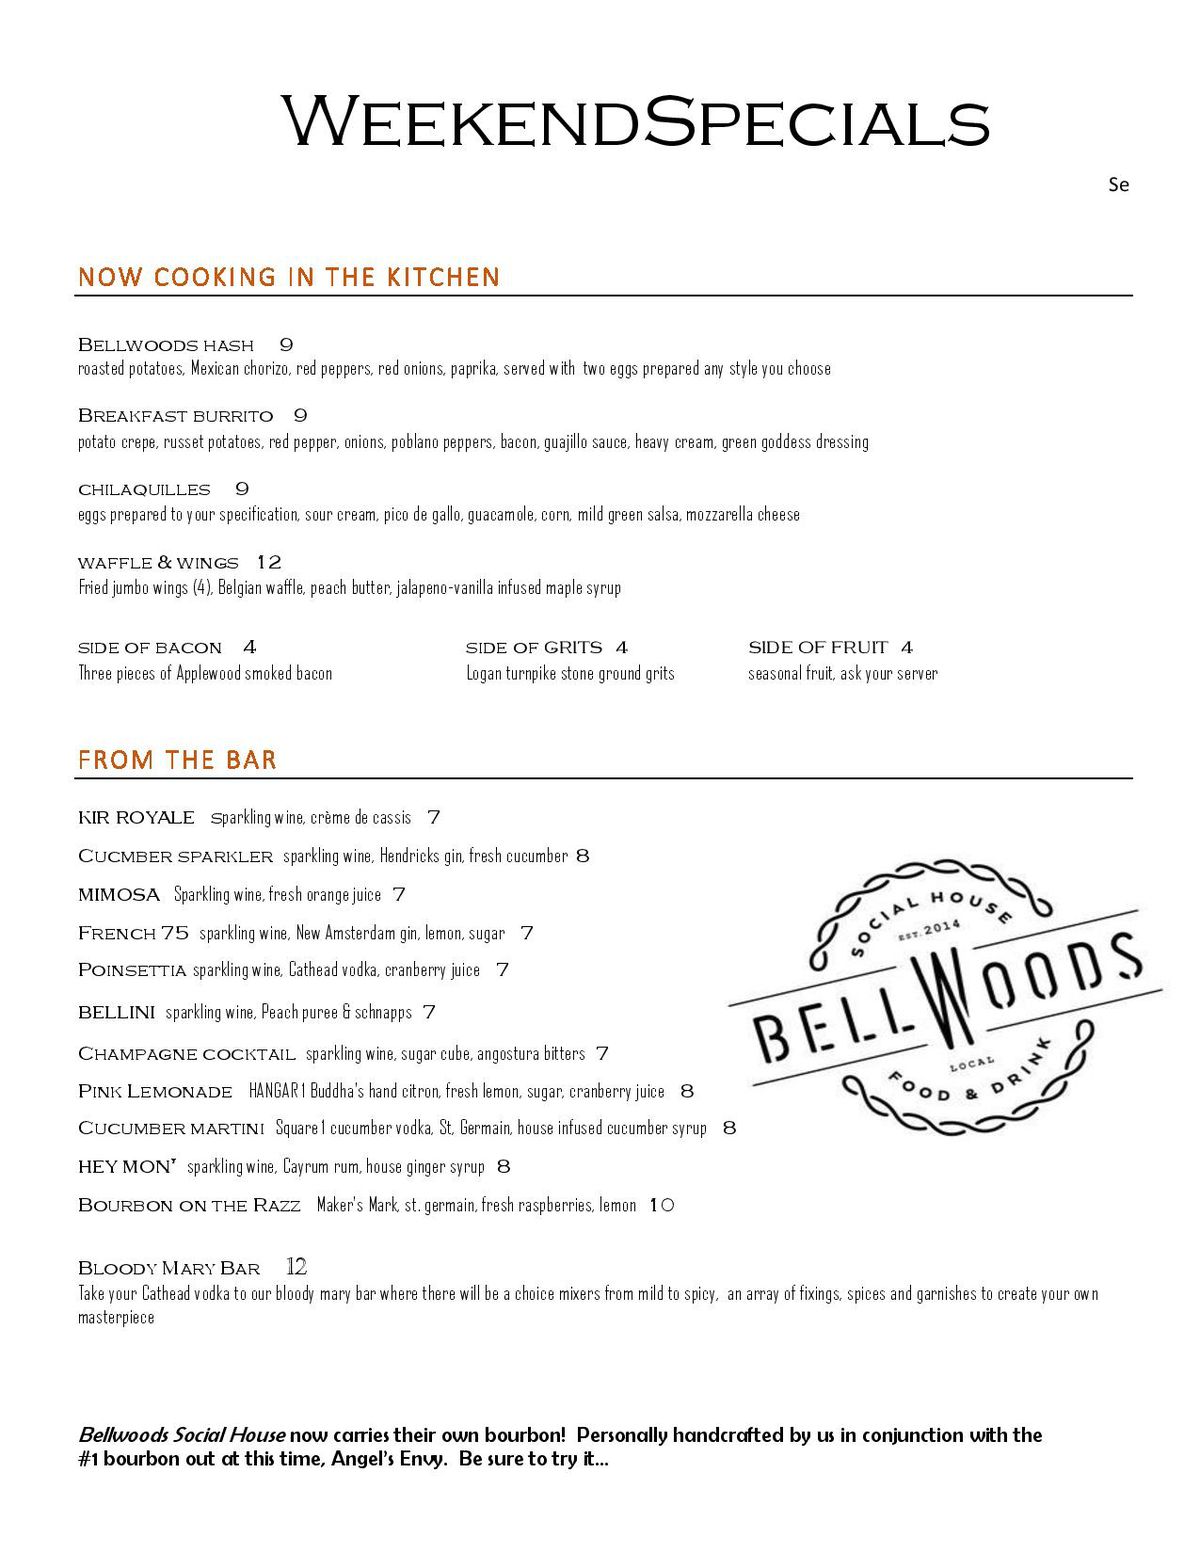 Bellwoods Social House brunch menu (correct)